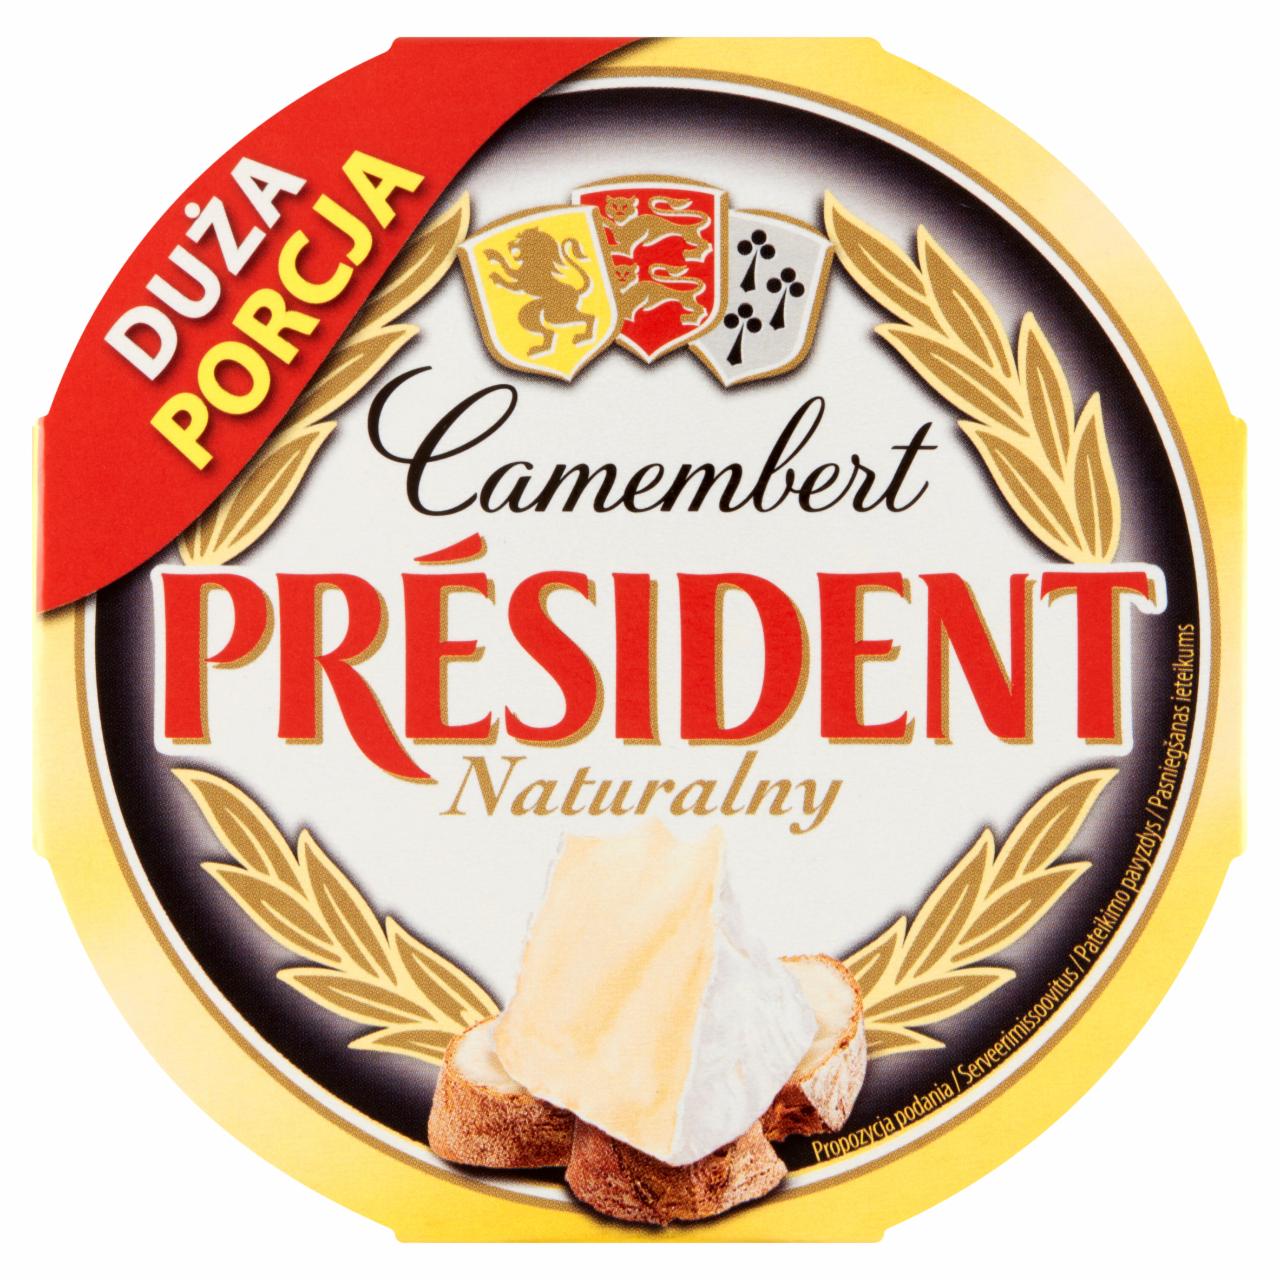 Fotografie - Camembert naturalny Président